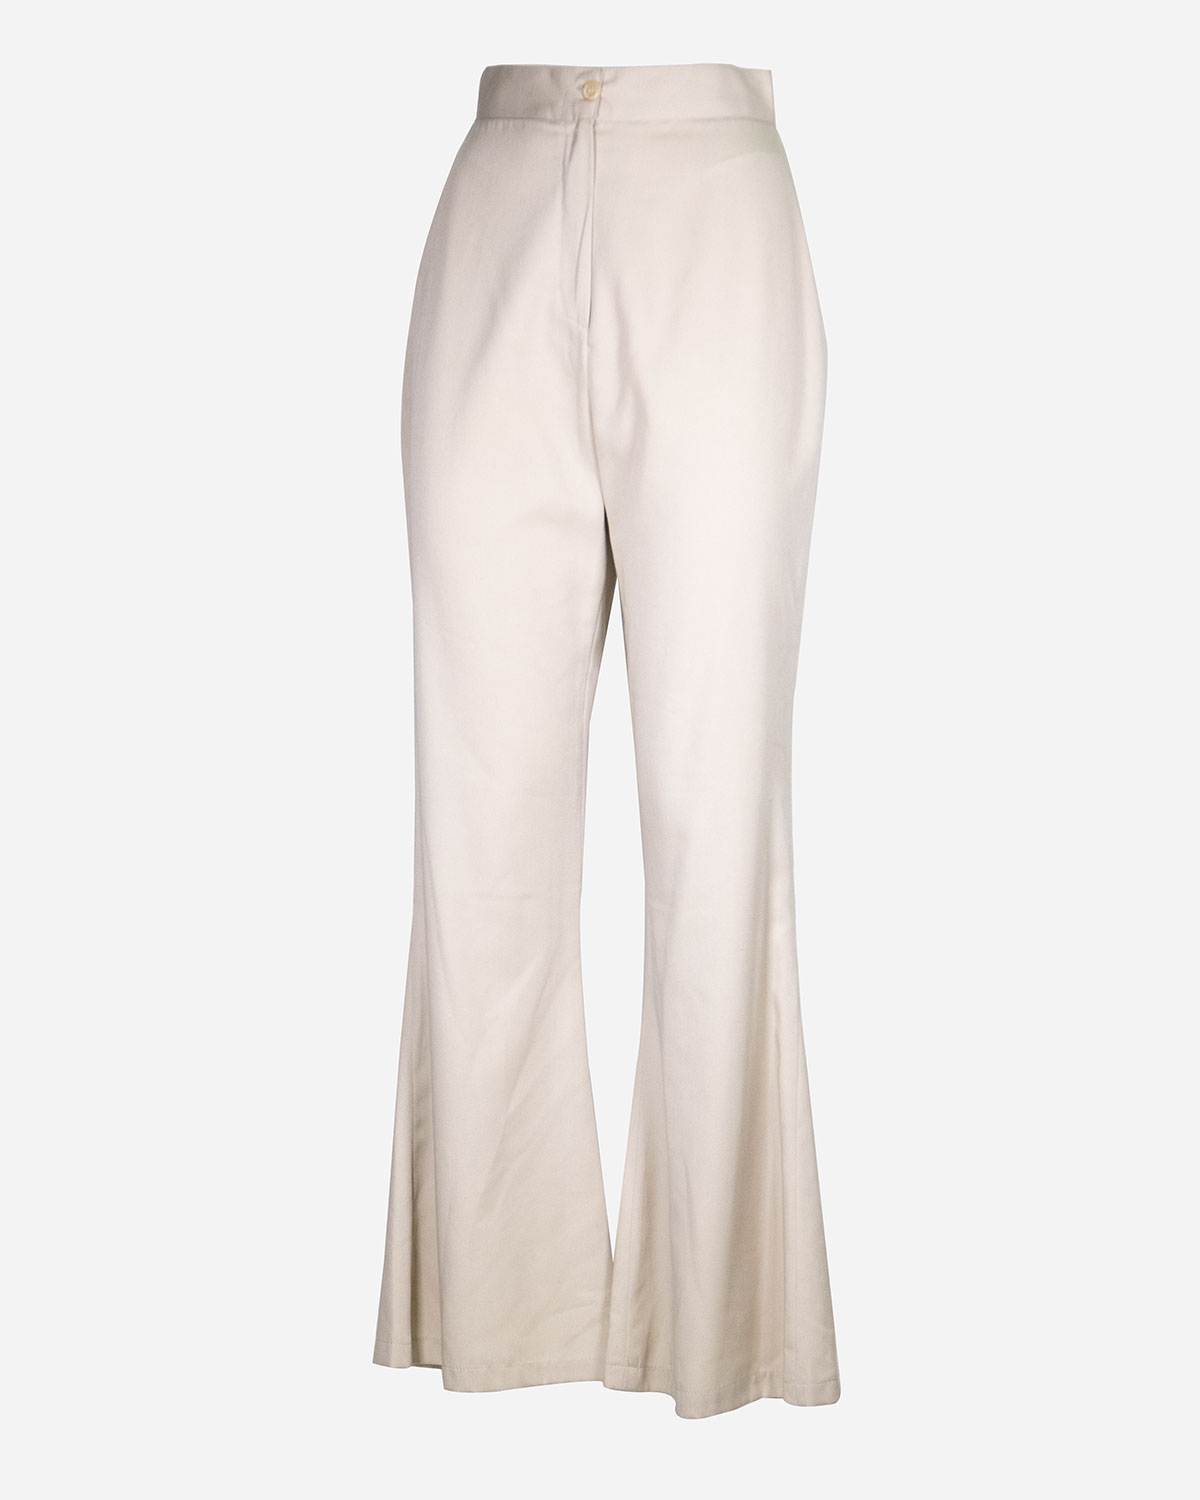 Women's 80/90 summer pants: 4 pieces